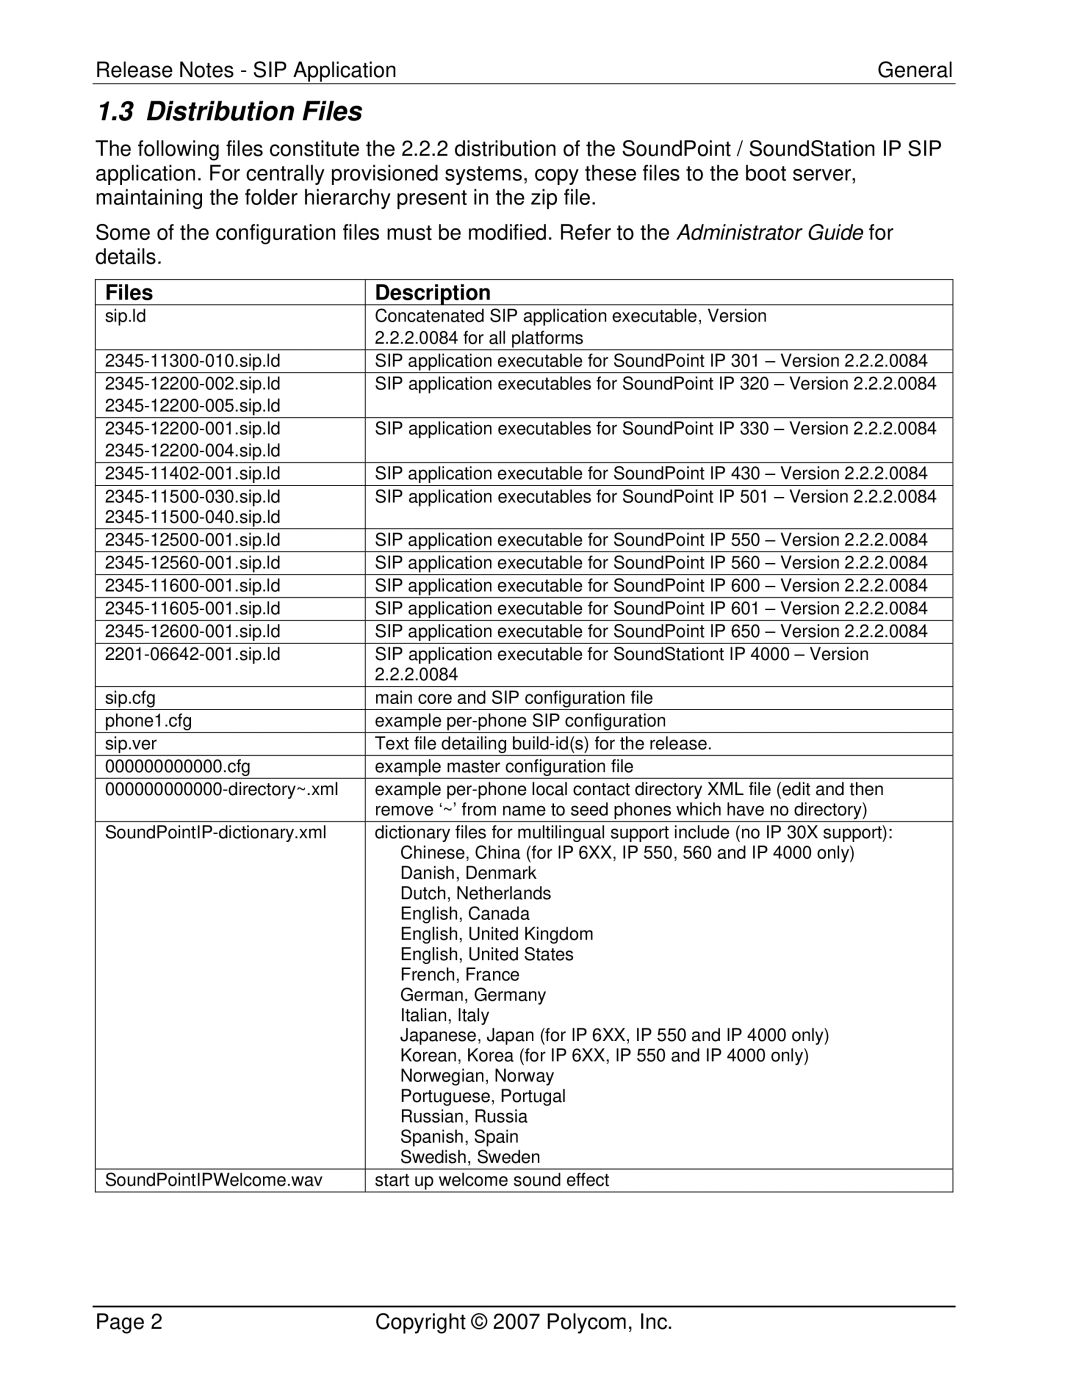 Polycom 3804-11530-222 manual Distribution Files, Files Description 